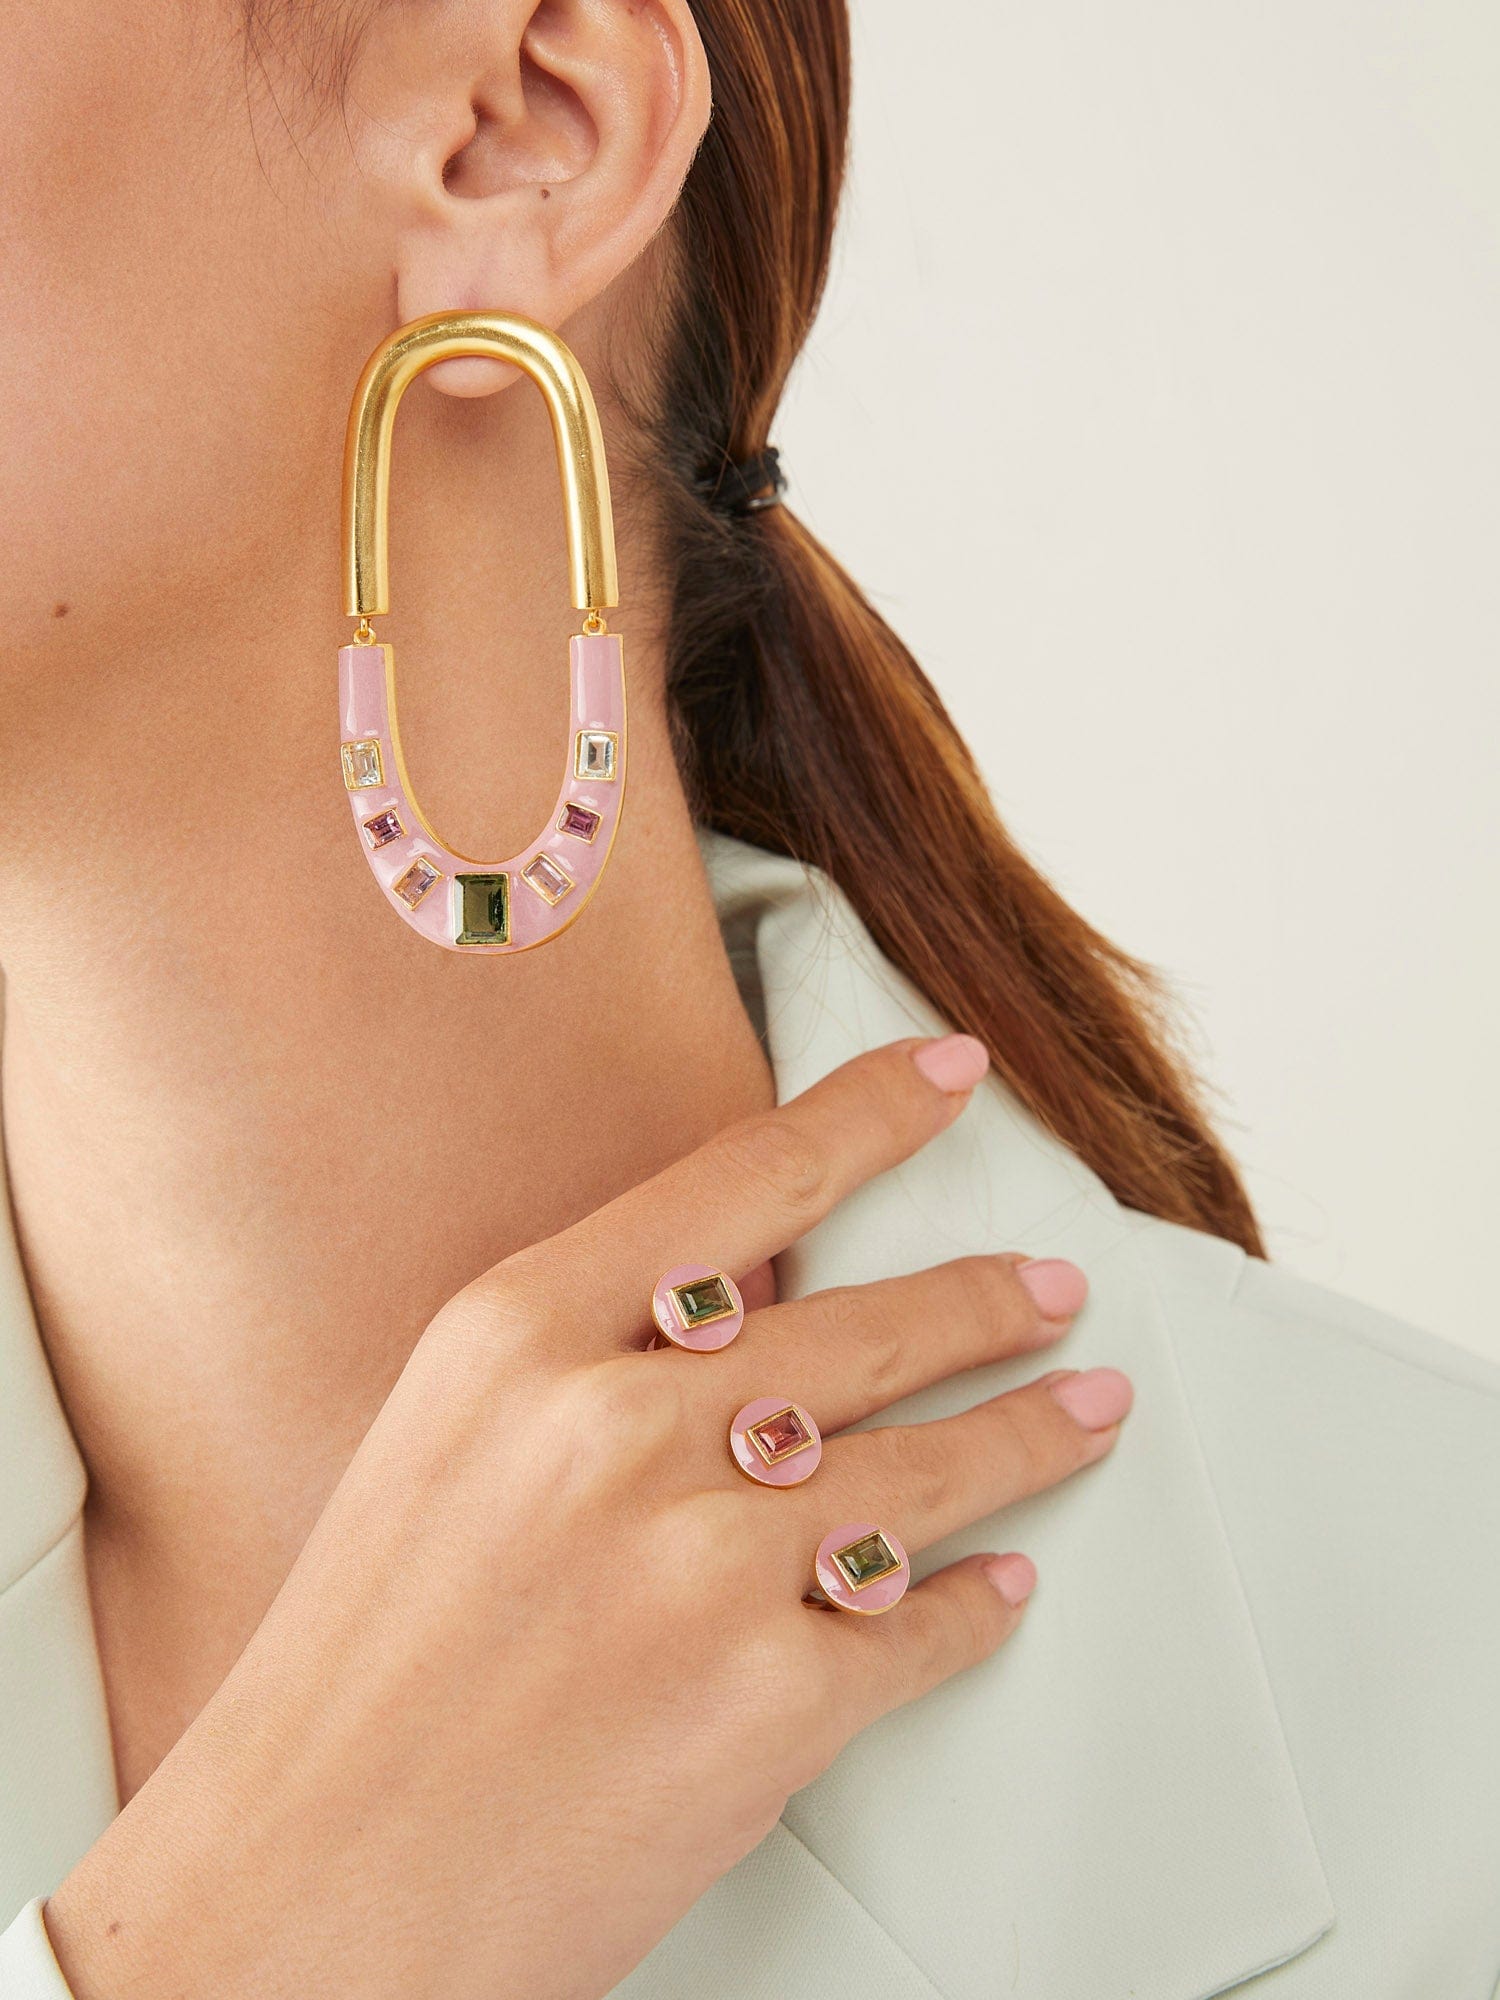 Valentina earrings